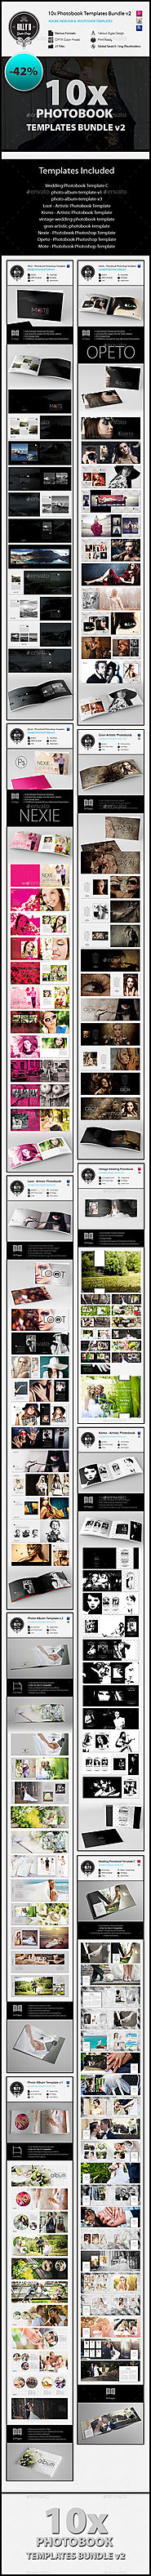 10x Photobook Templates Bundle v2 | GraphicRiver